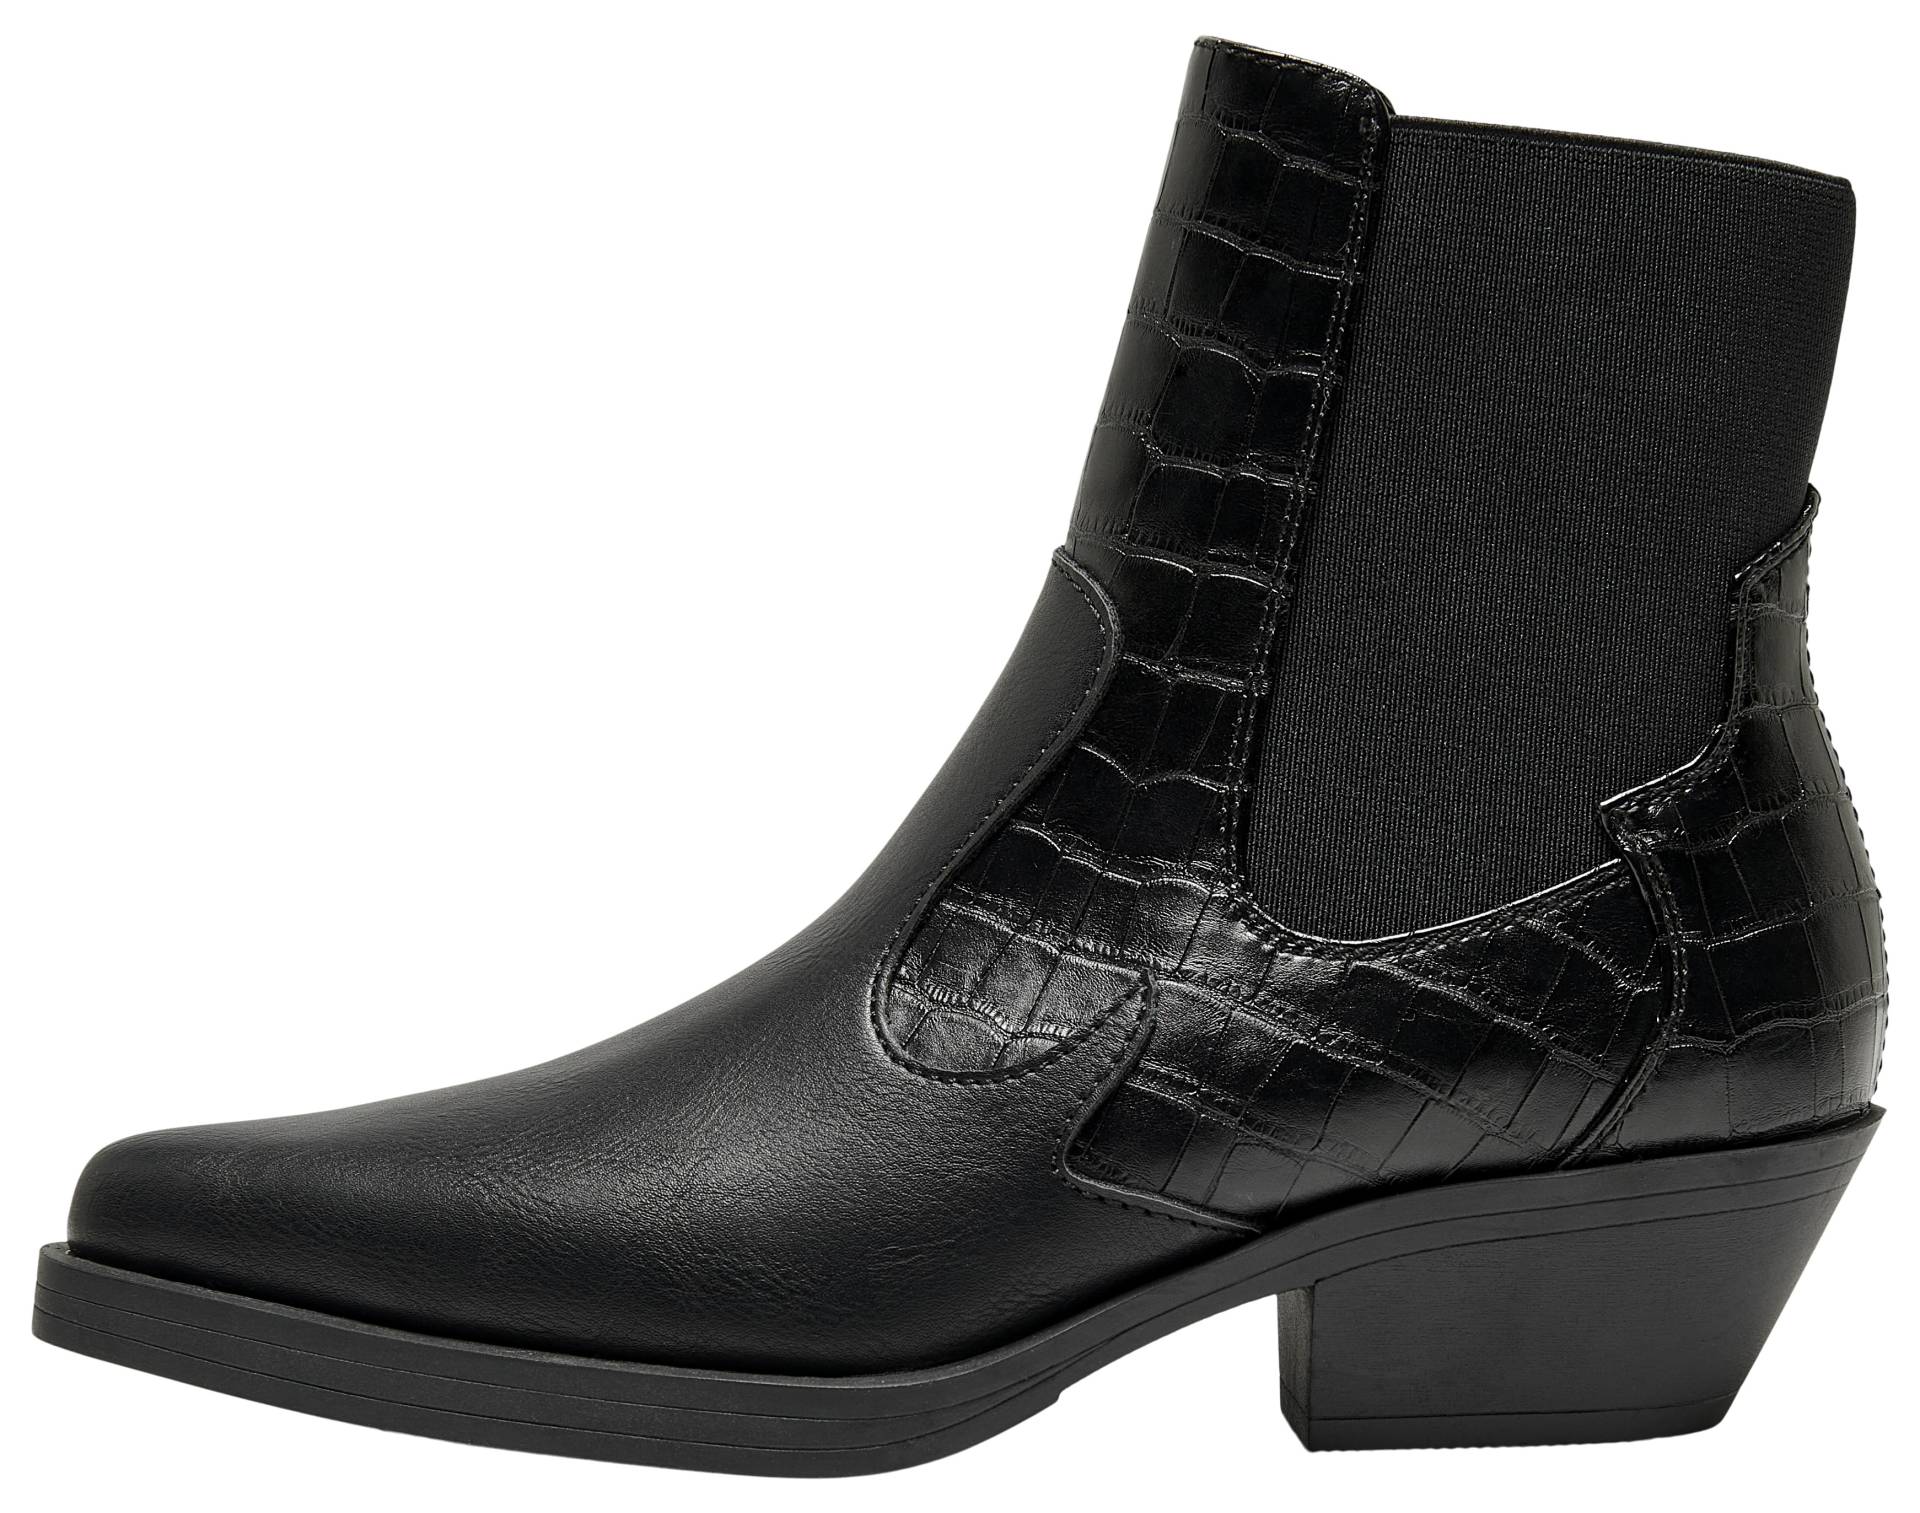 ONLY Shoes Westernstiefelette »ONLBRONCO-2«, Cowboy Stiefelette, Boots in spitz zulaufender Form von ONLY Shoes